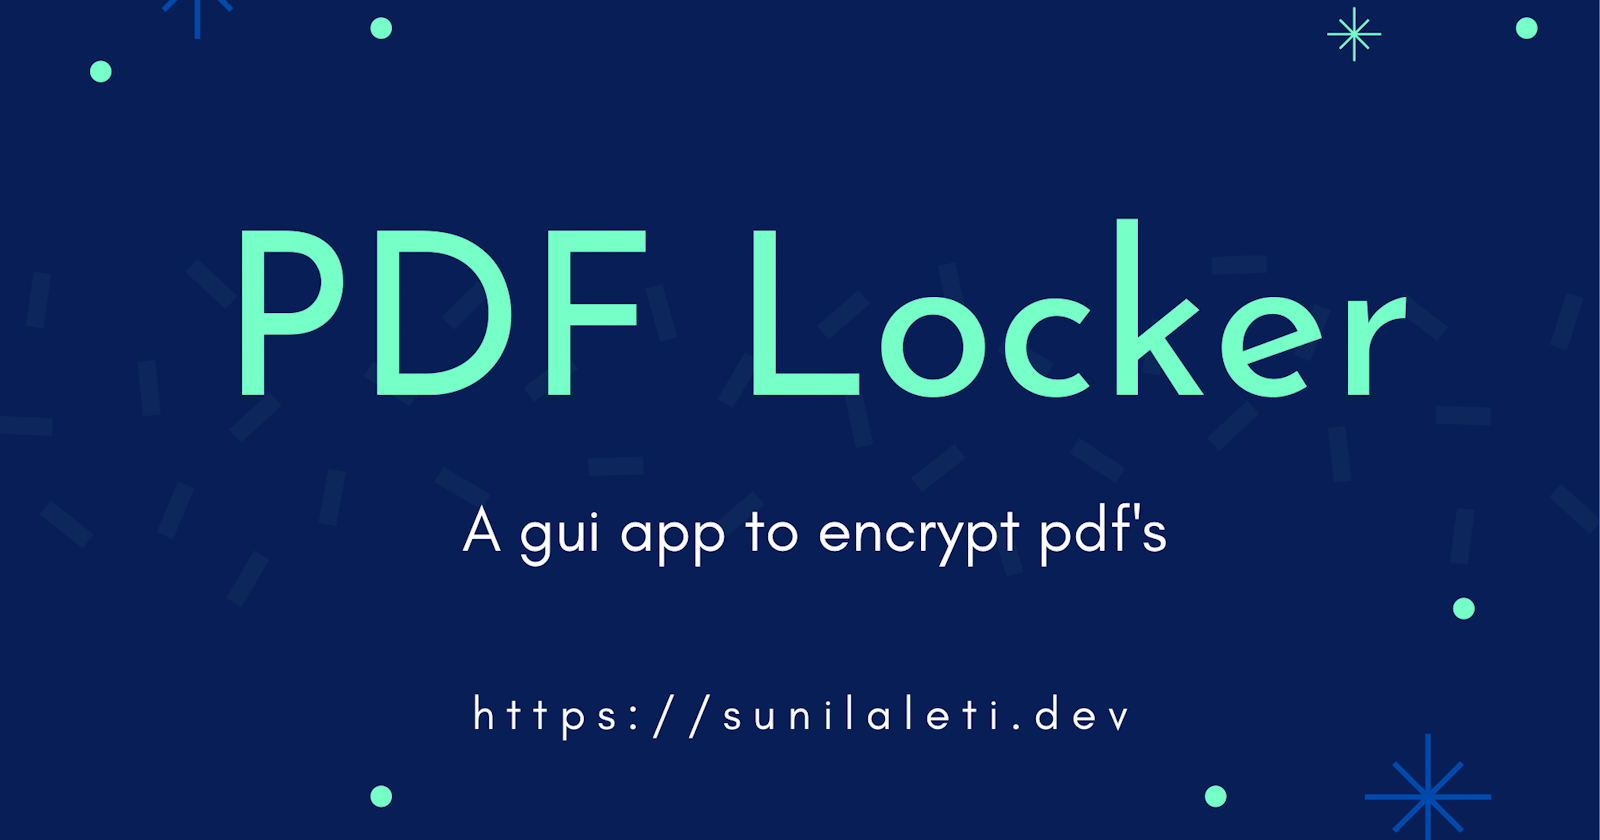 Building a PDF Locker GUI Application